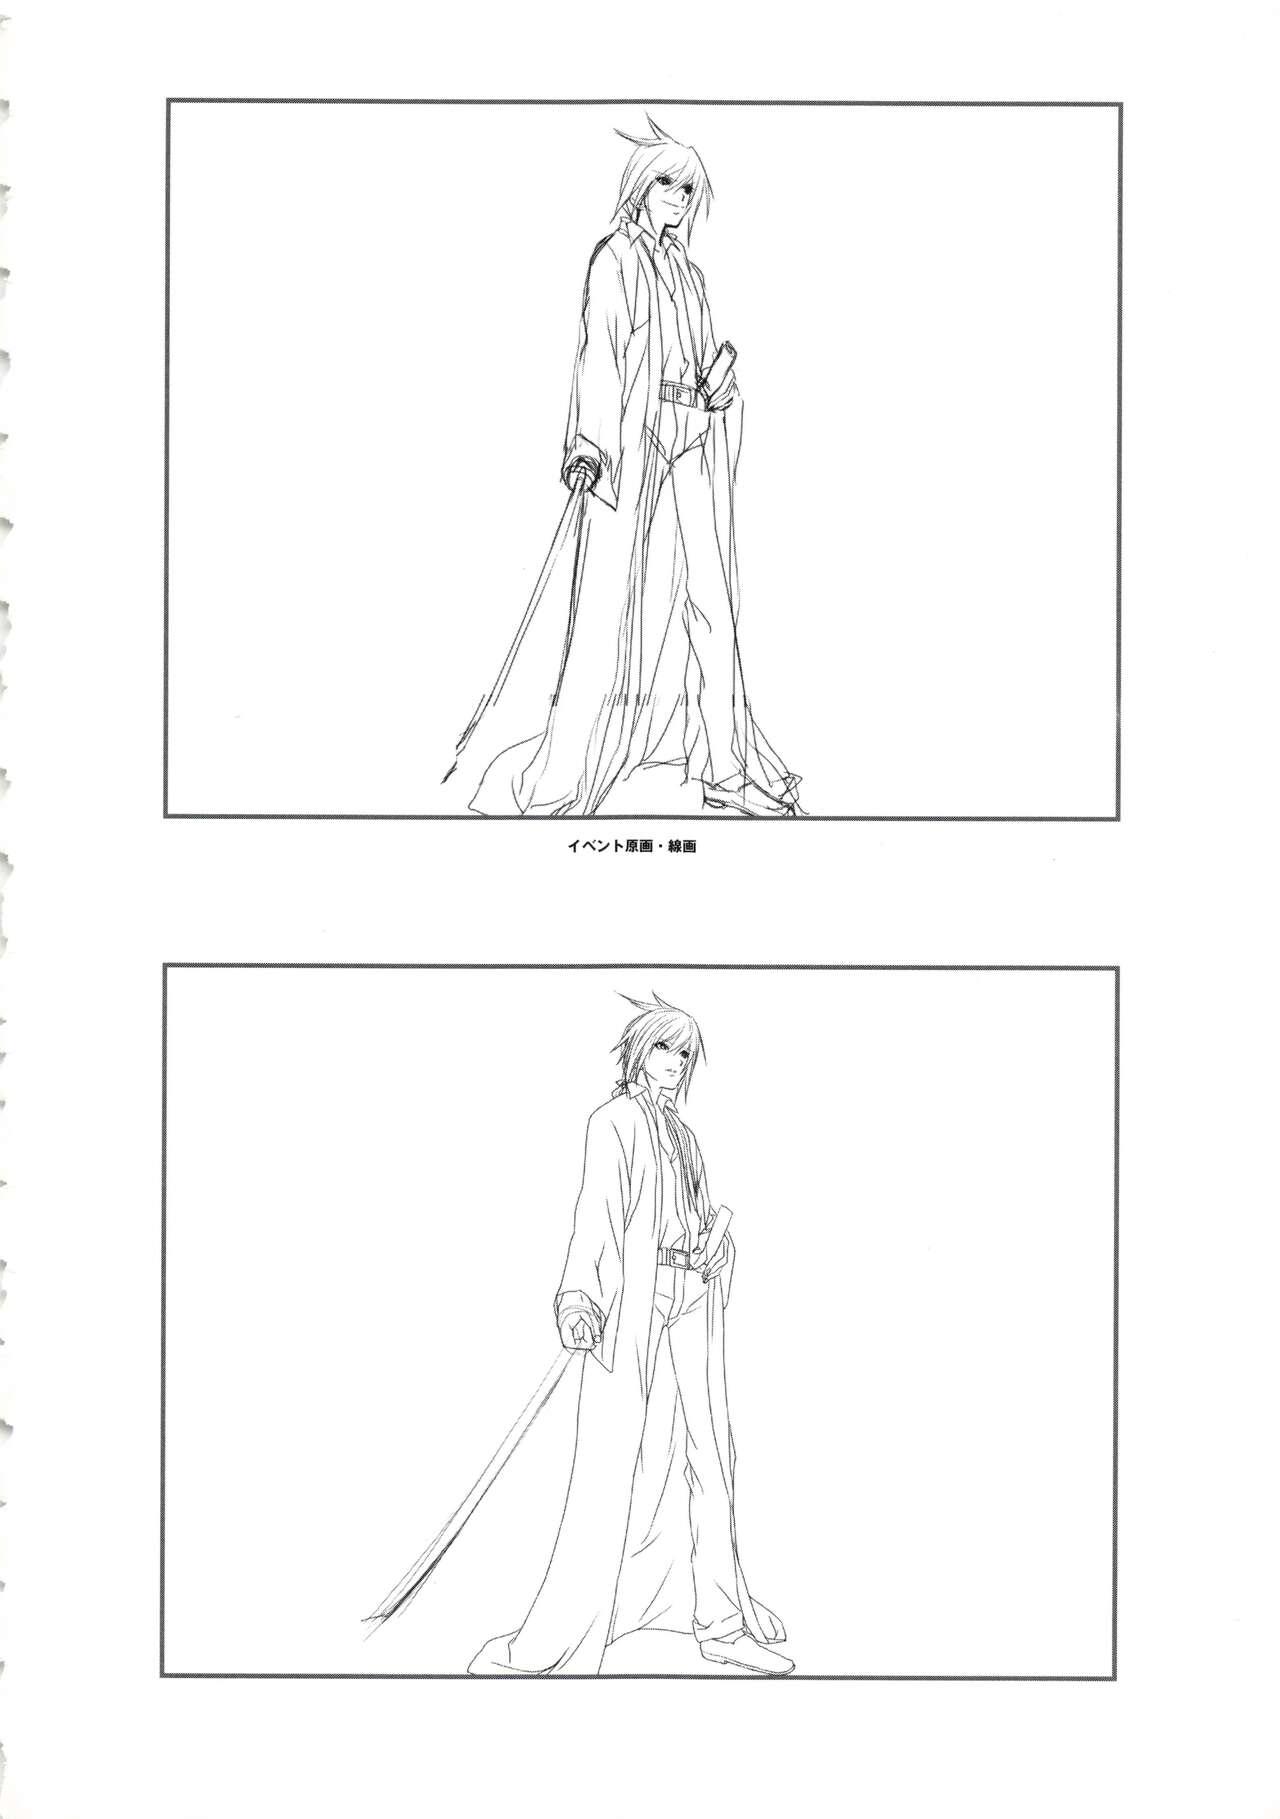 Hanachirasu - Initial Sketches and Unprocessed Illustrations - Selection 22